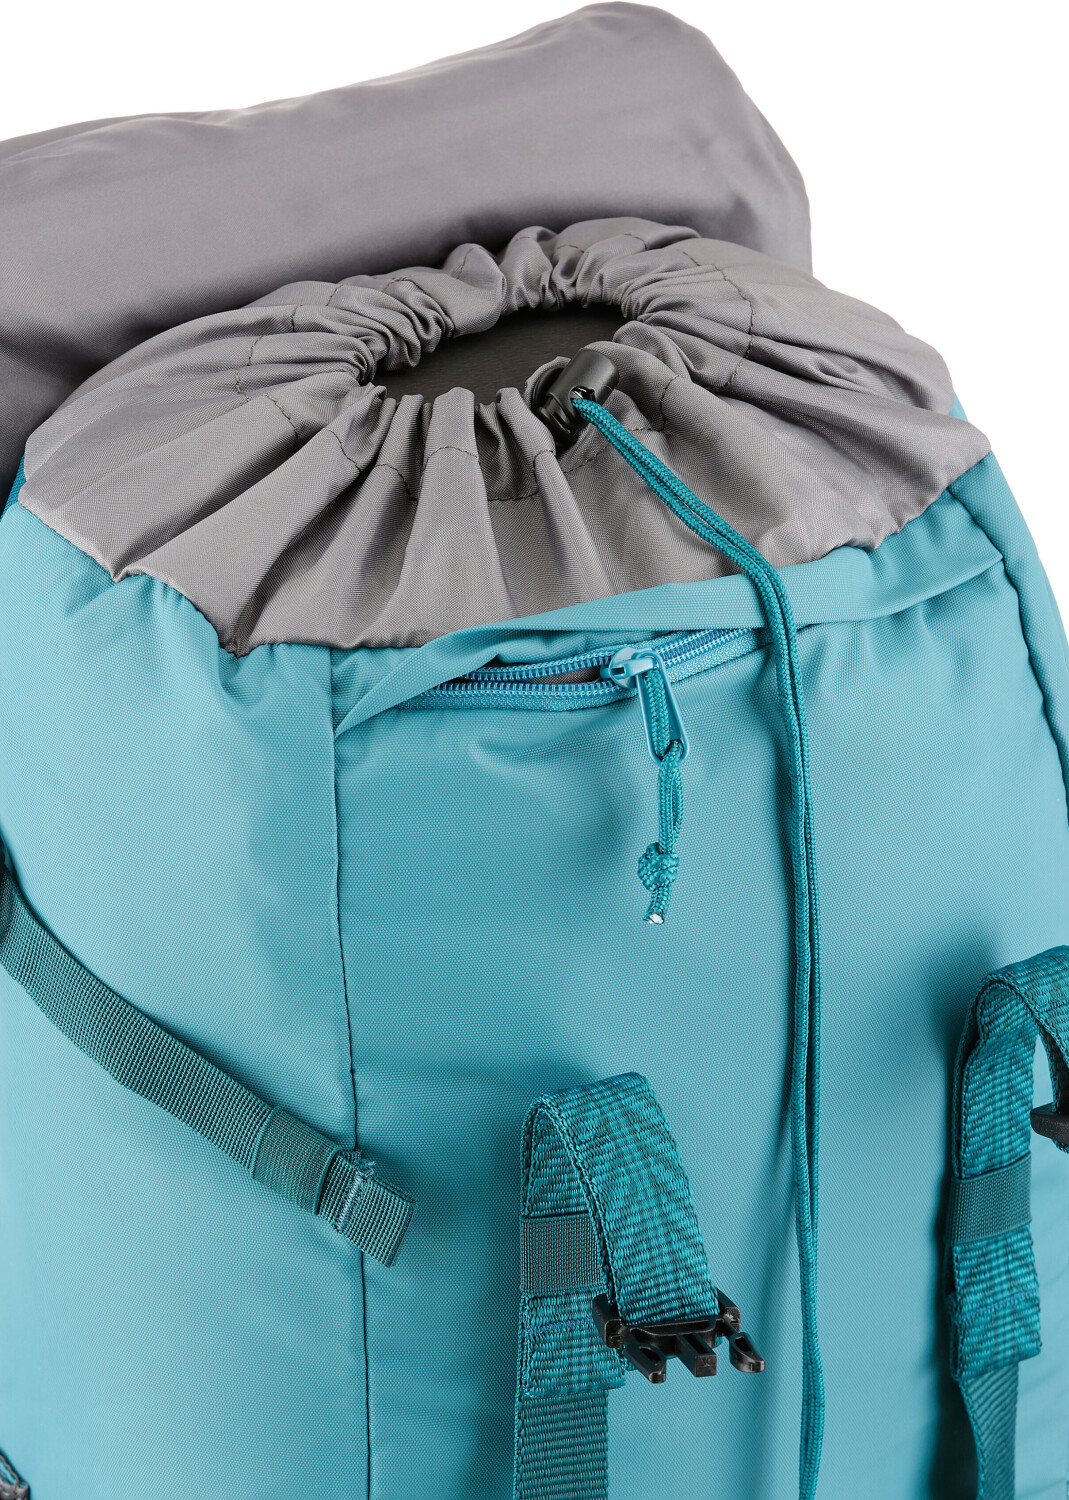 Burton Rucksack Backpacks, Brittany Blue/Shaded Spruce, One Size